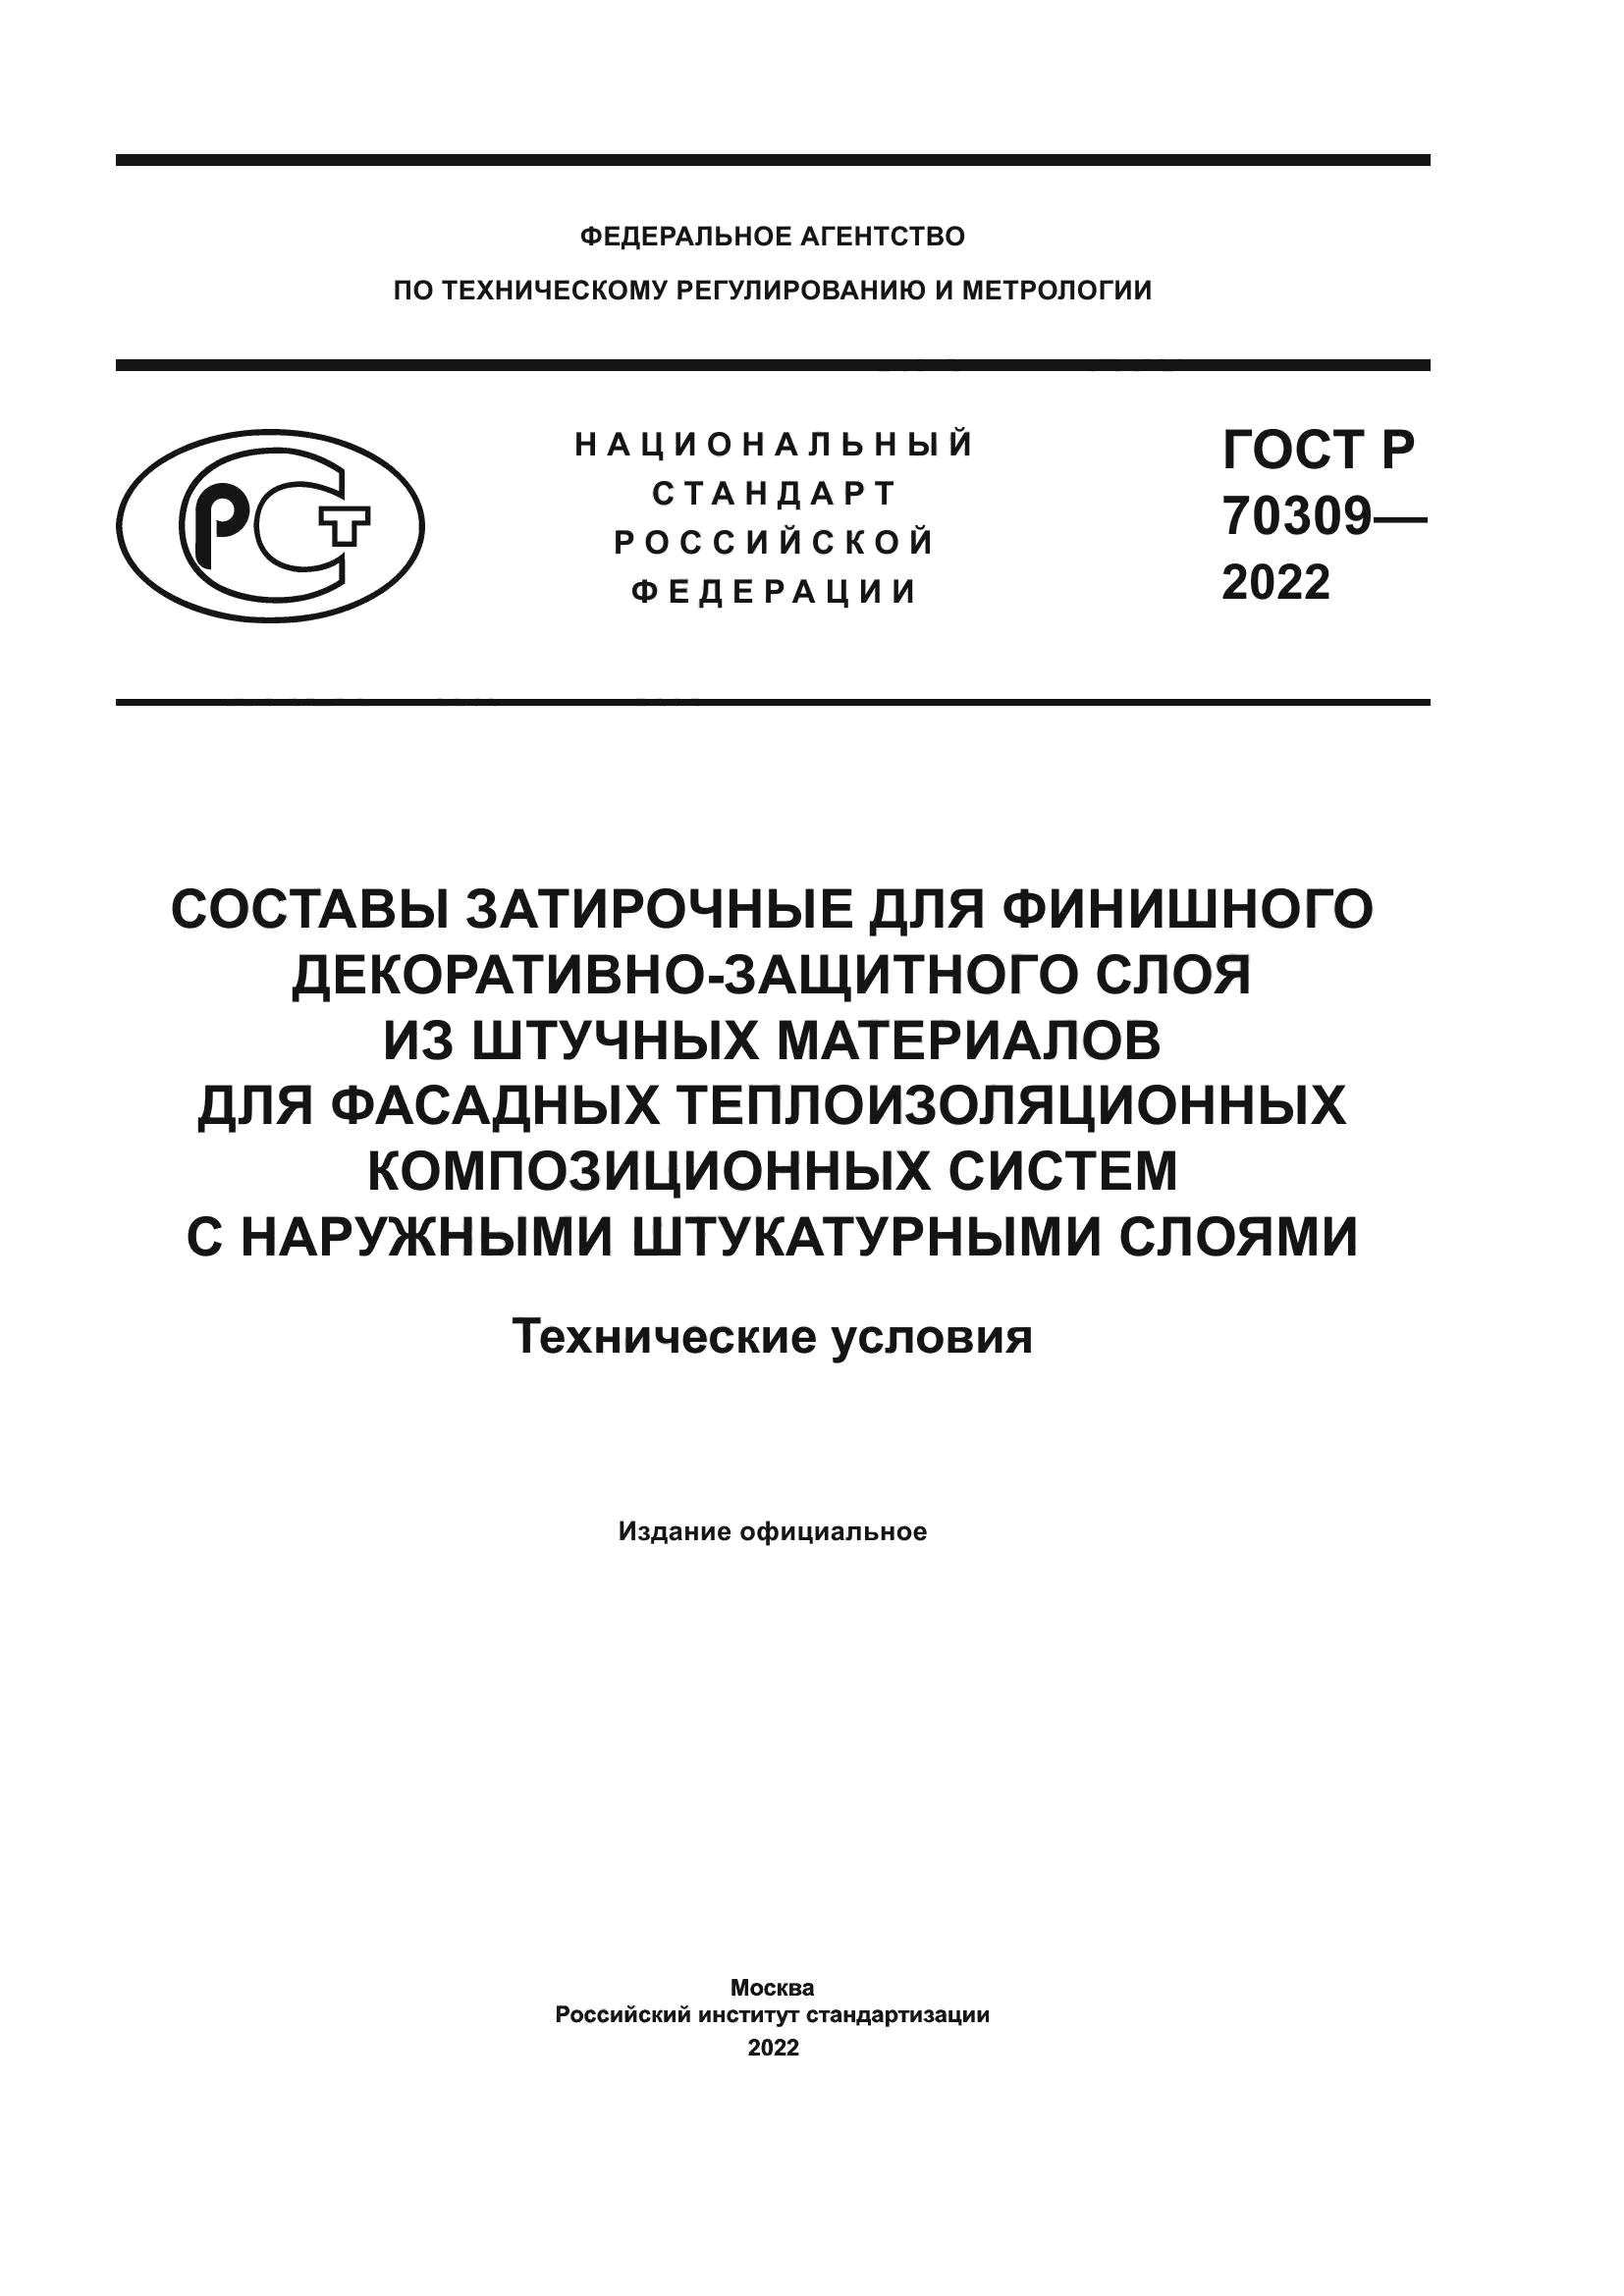 ГОСТ Р 70309-2022